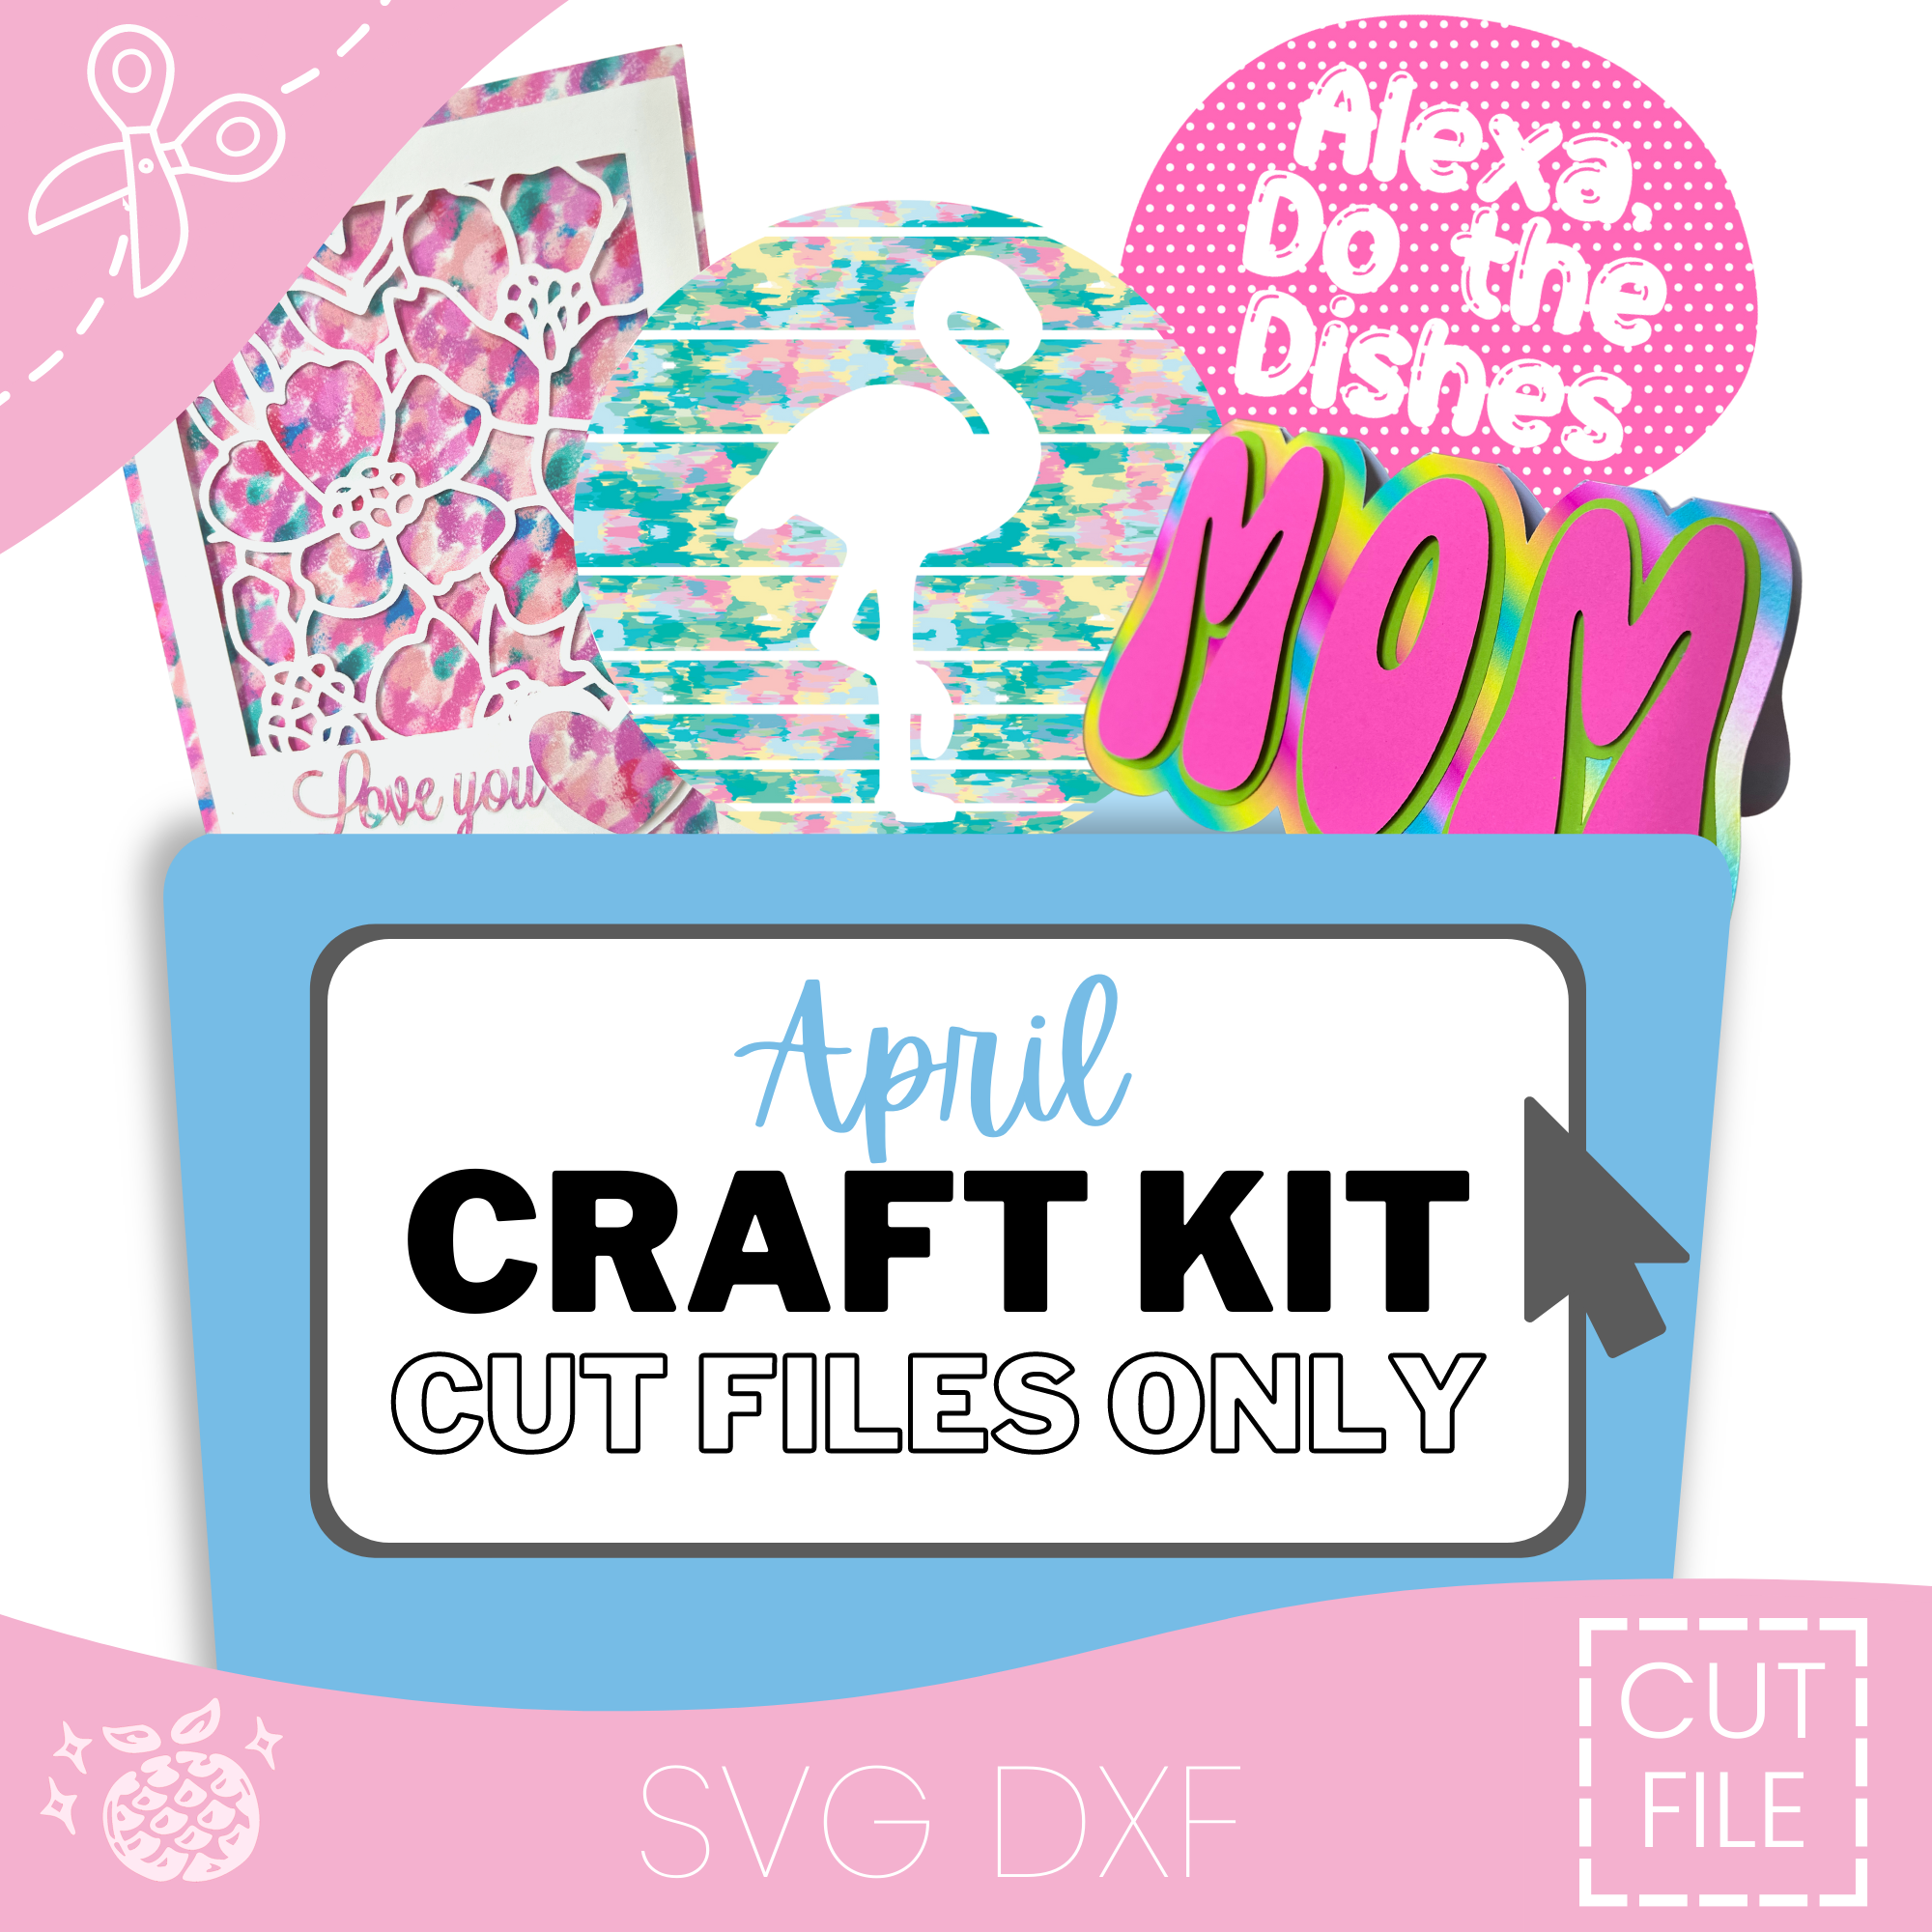 April "Craft Kit Cut Files Only" Option